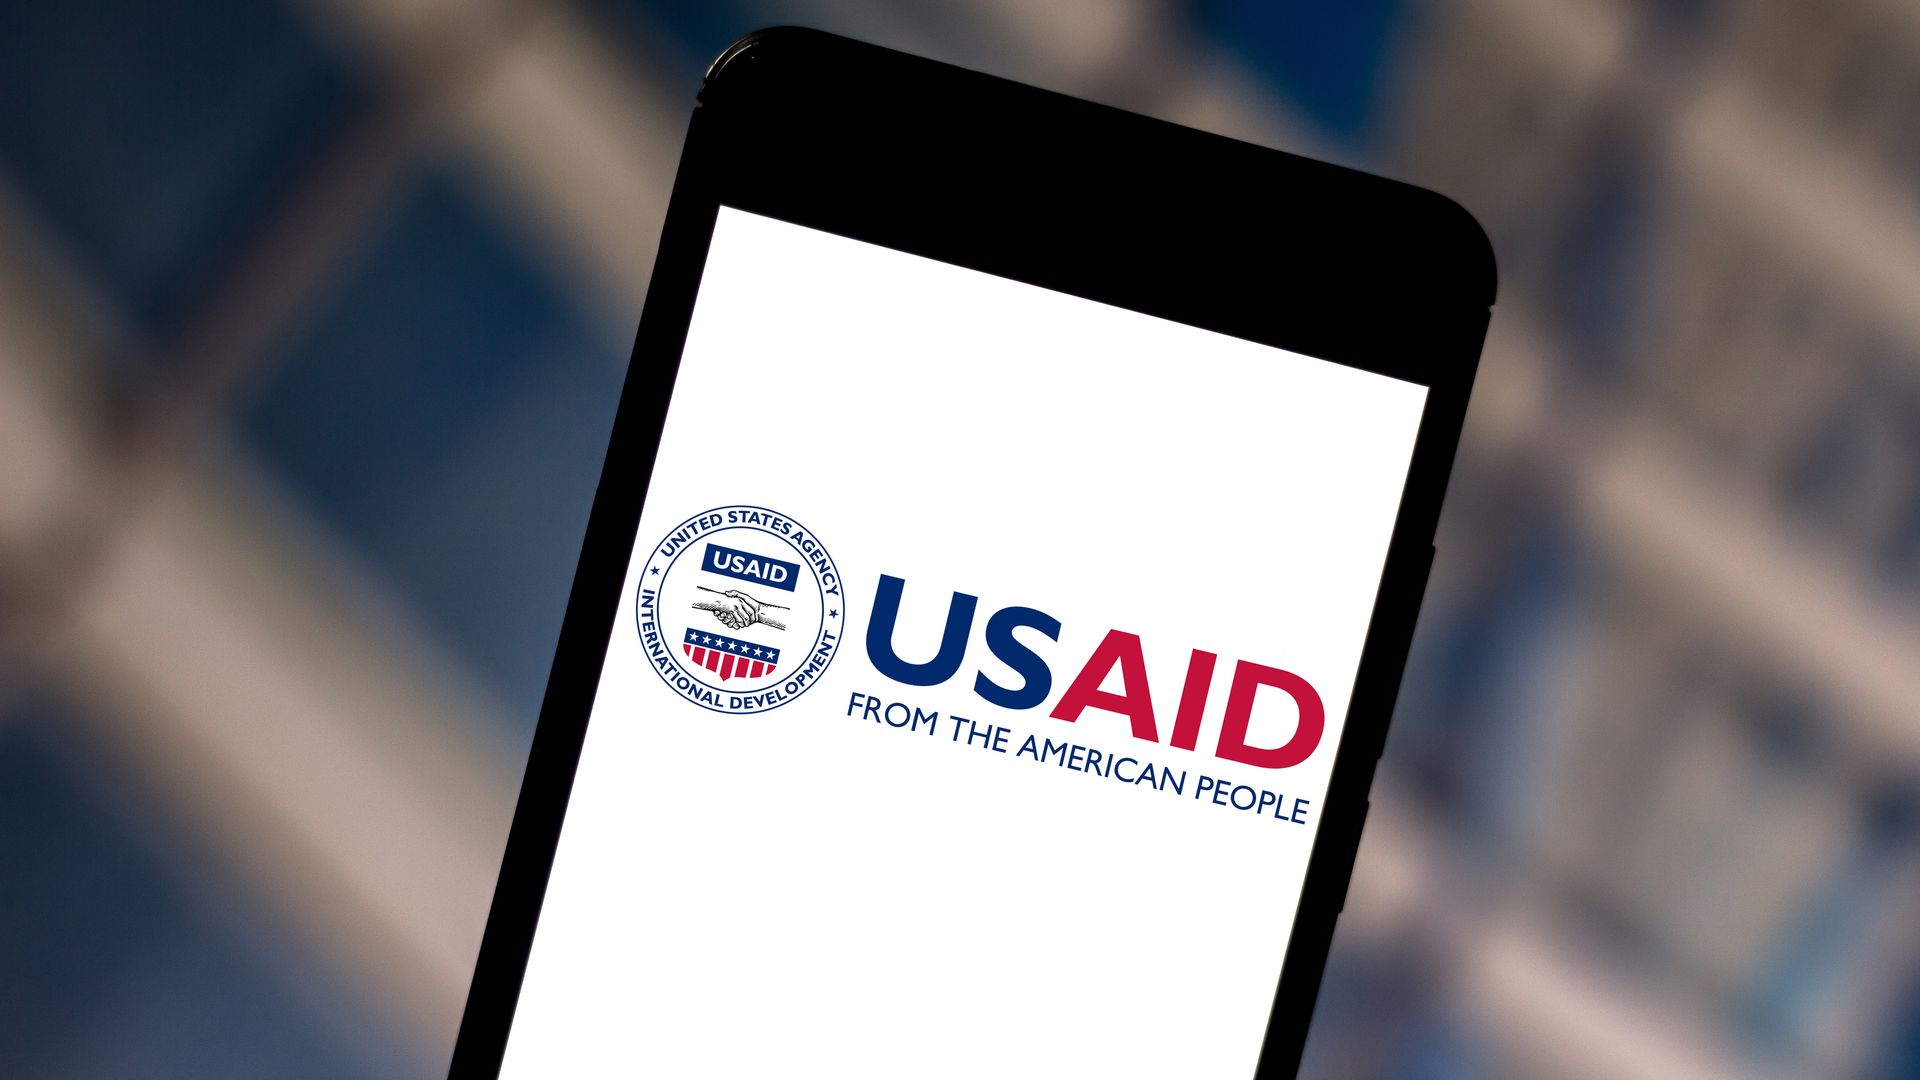 USAID's logo displayed on a phone screen.